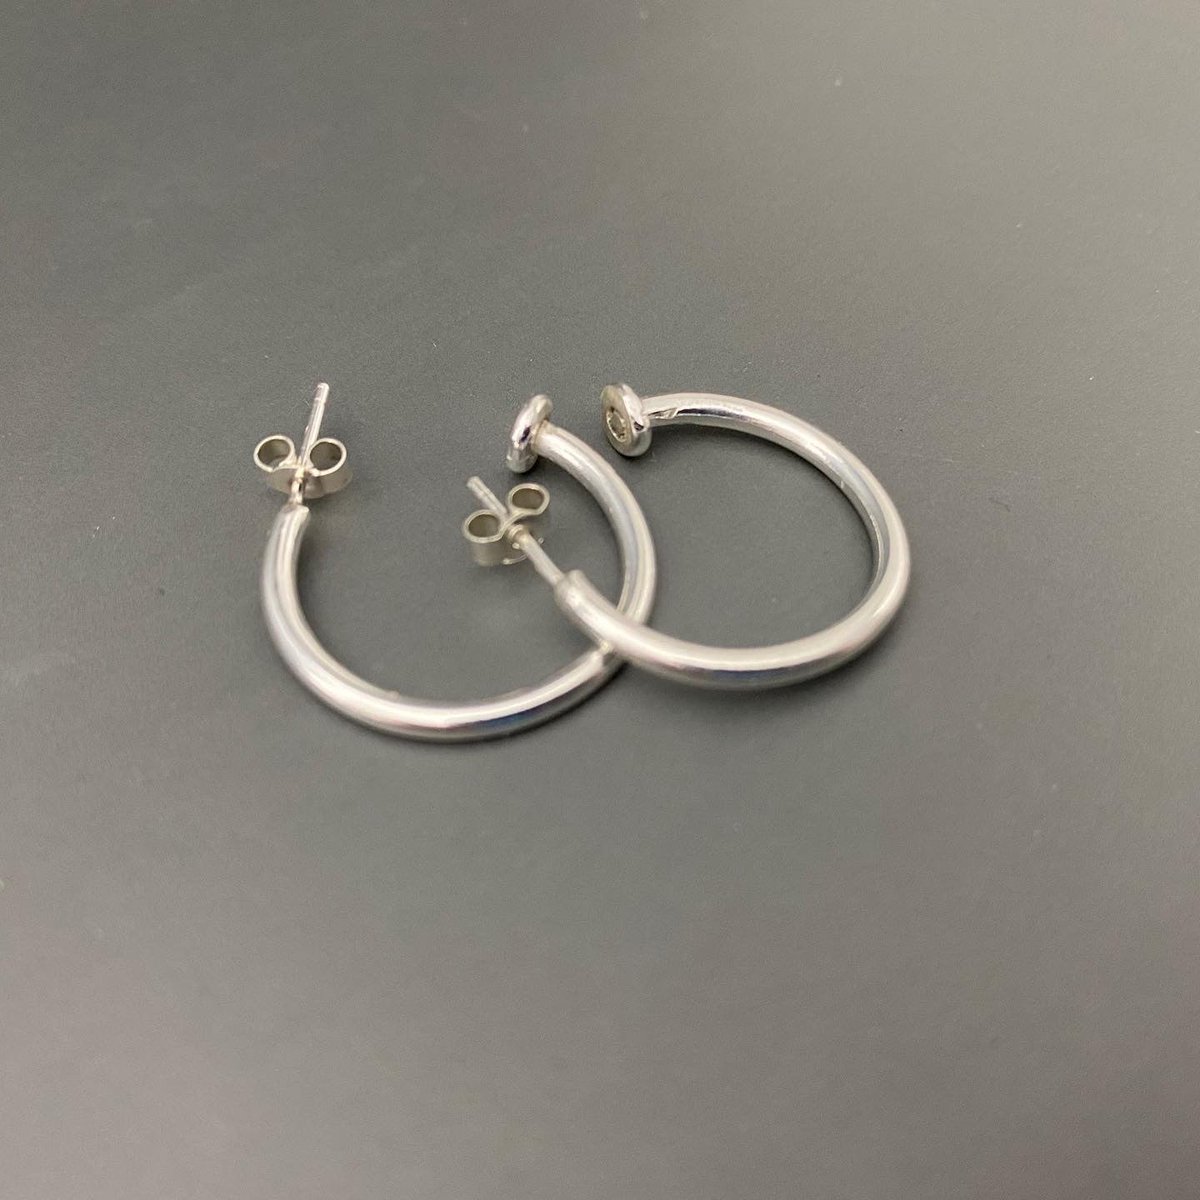 Sterling Silver Hoop Earrings tuppu.net/ff55d1f2 #shopsmall #HandmadeHour #bizbubble #giftideas #inbizhour ##UKGiftHour #MHHSBD #UKHashtags #SterlingSilverHoop